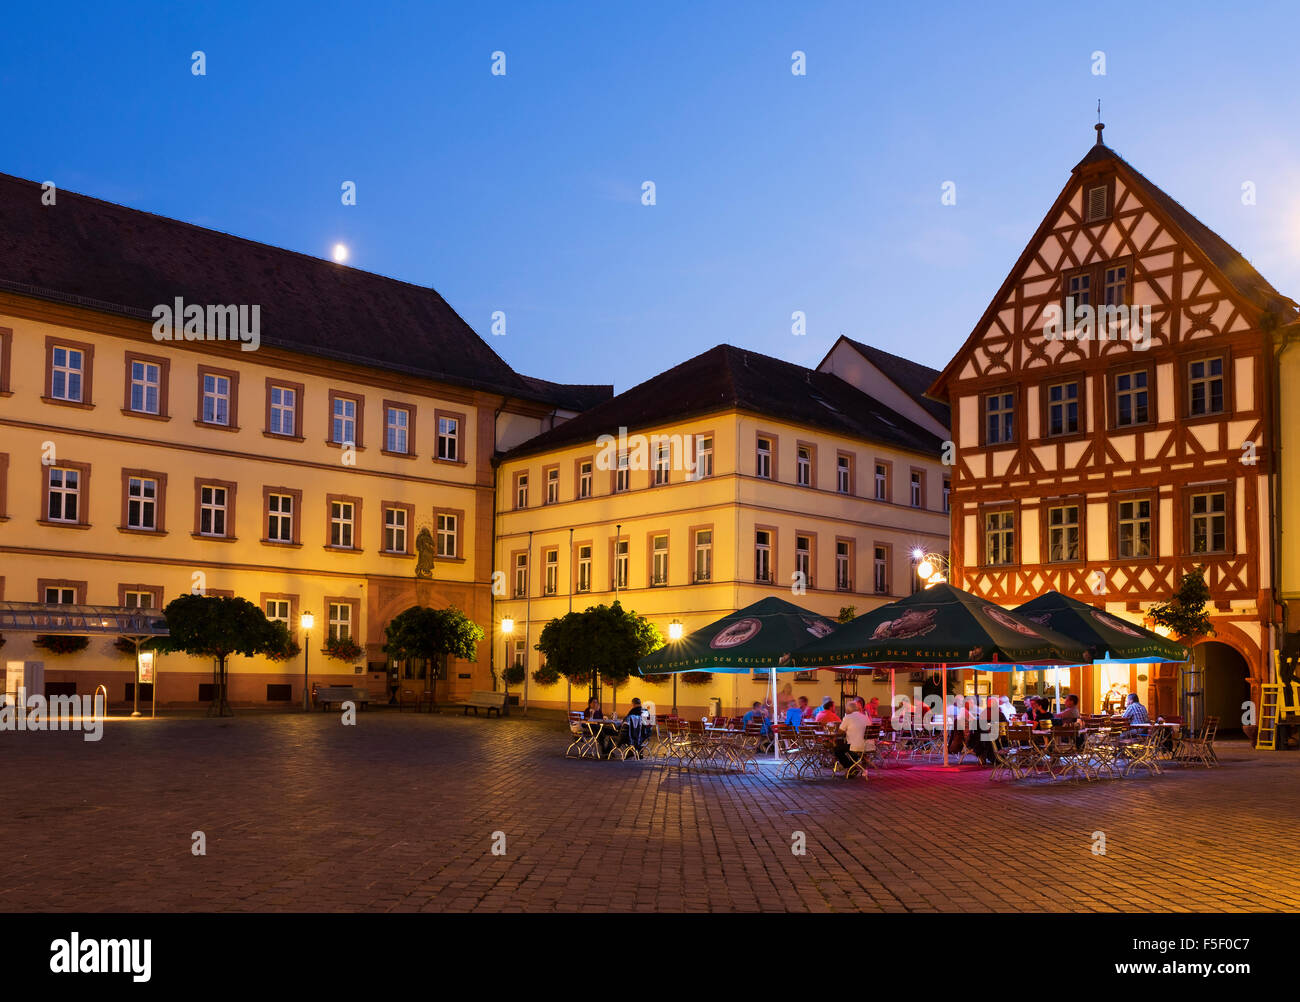 Marketplace at dusk, Karlstadt, Lower Franconia, Franconia, Bavaria, Germany Stock Photo